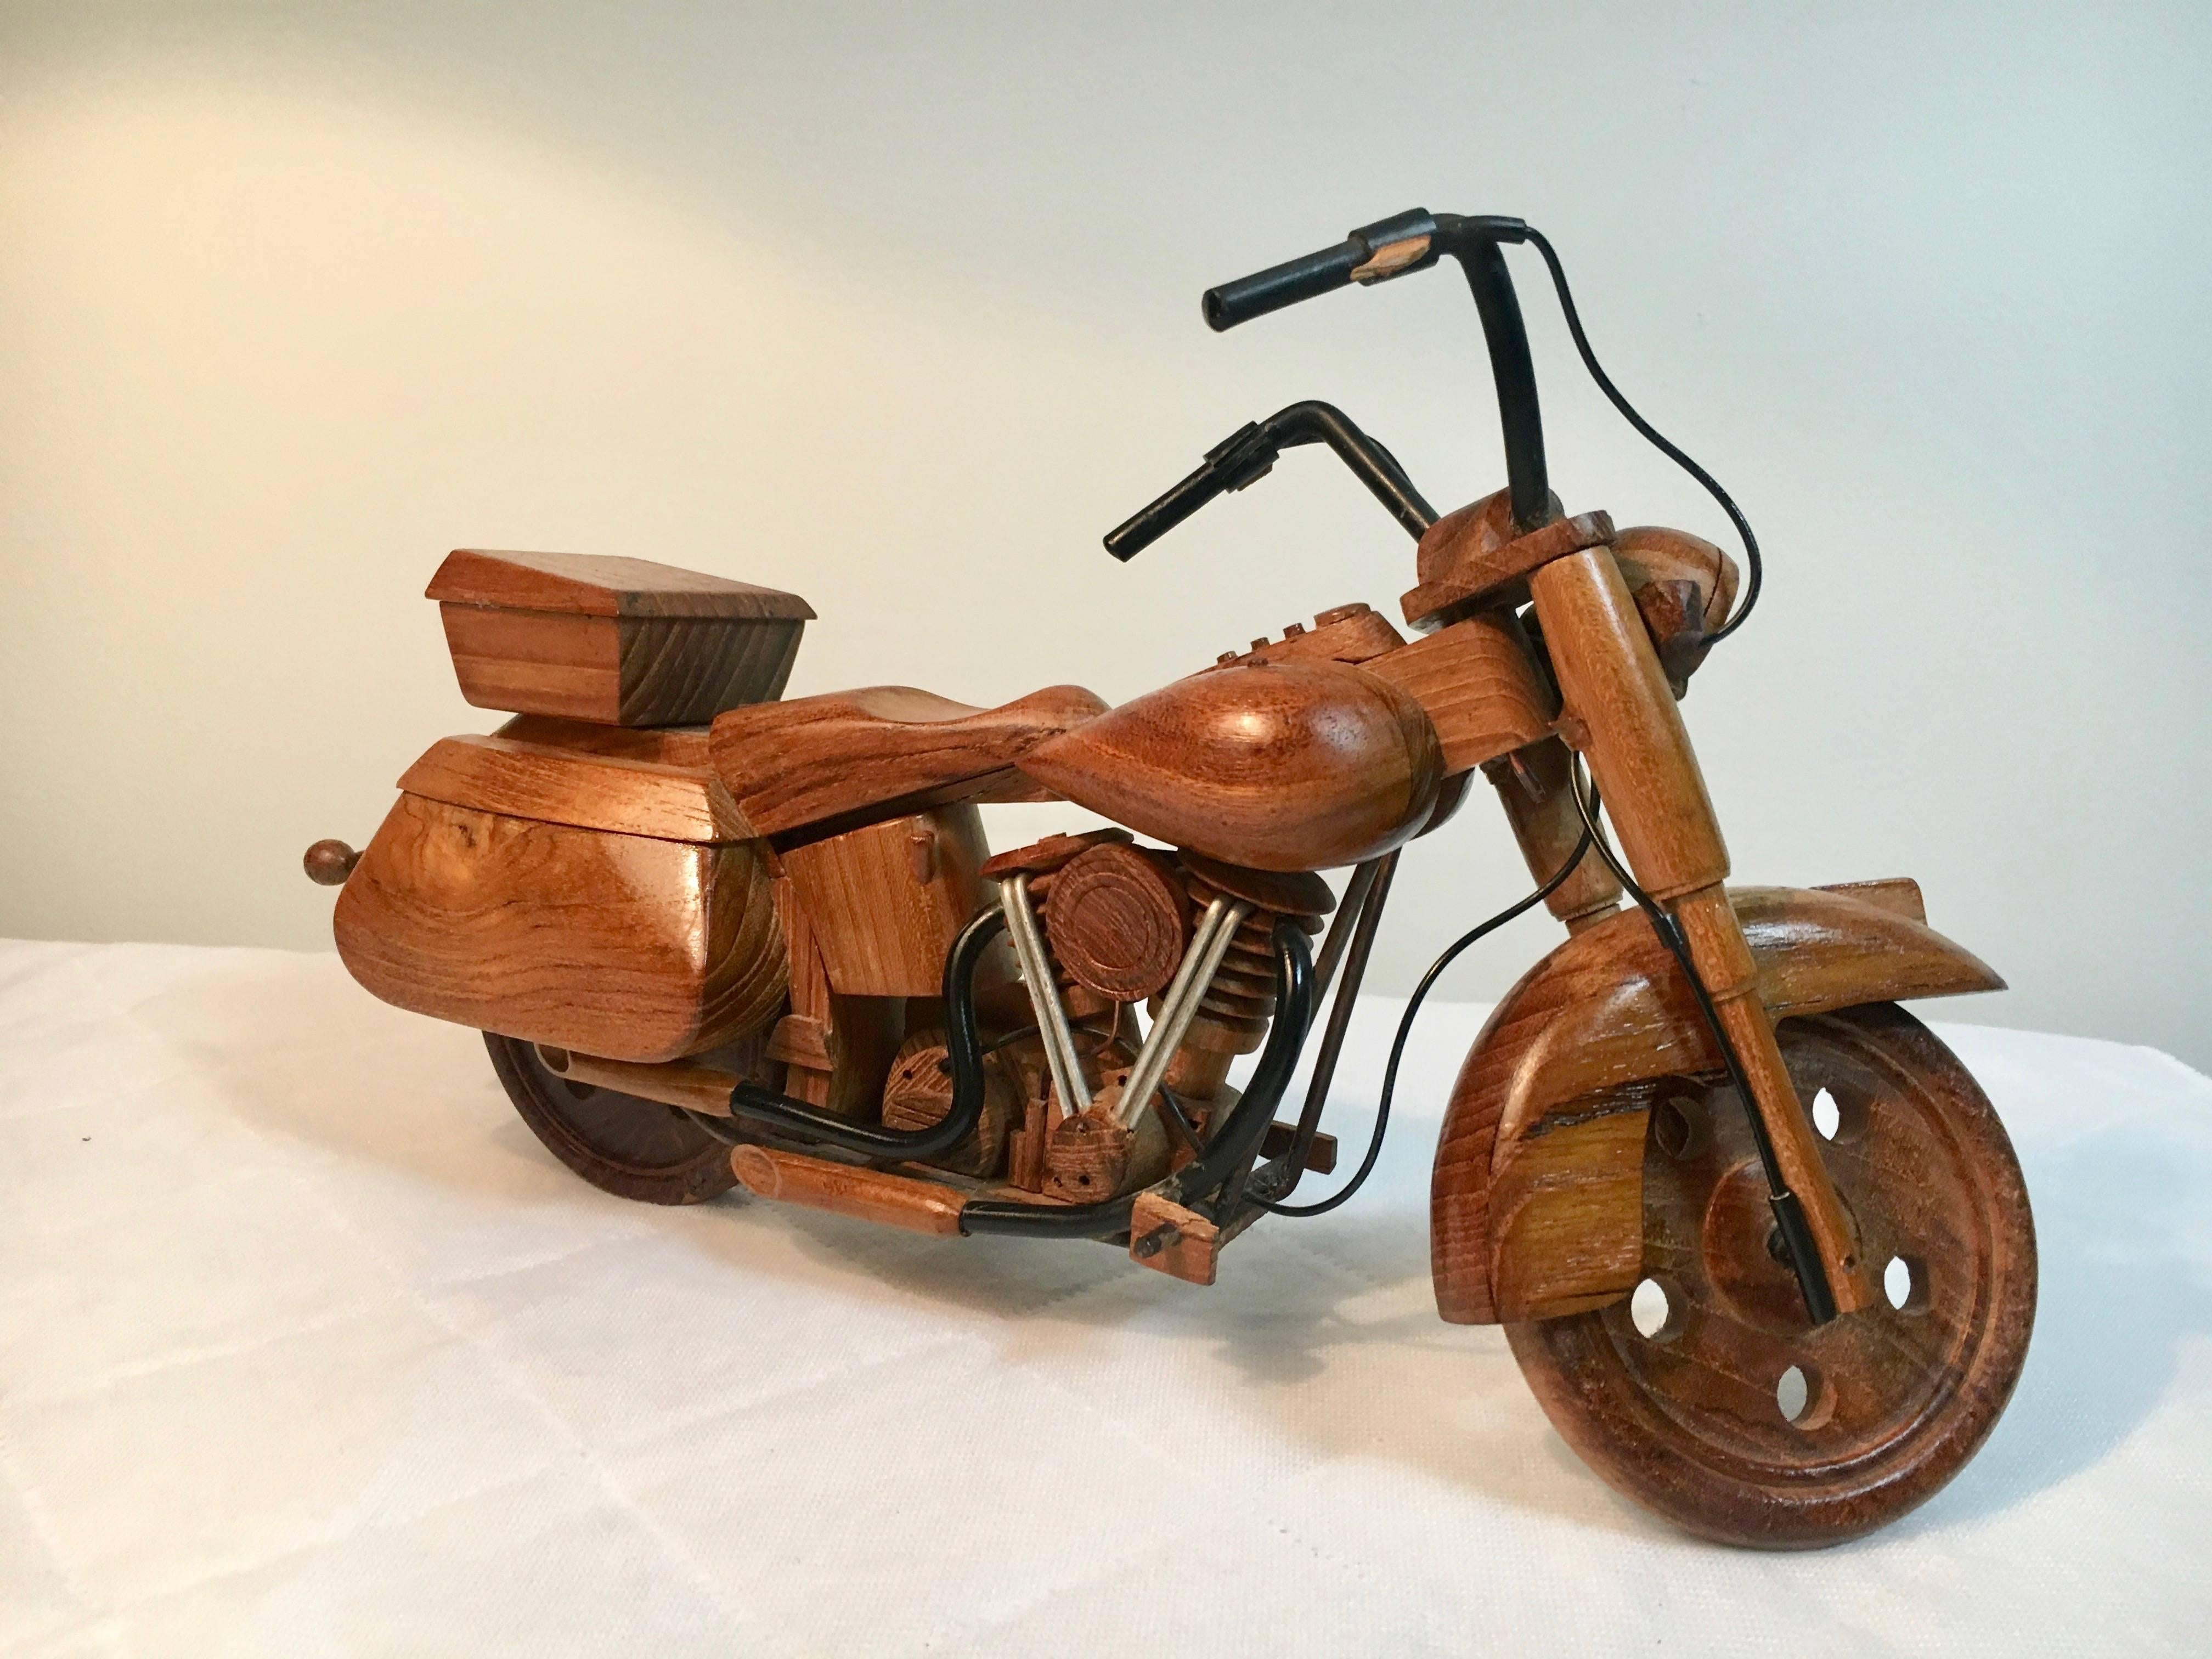 wooden motorcycle model